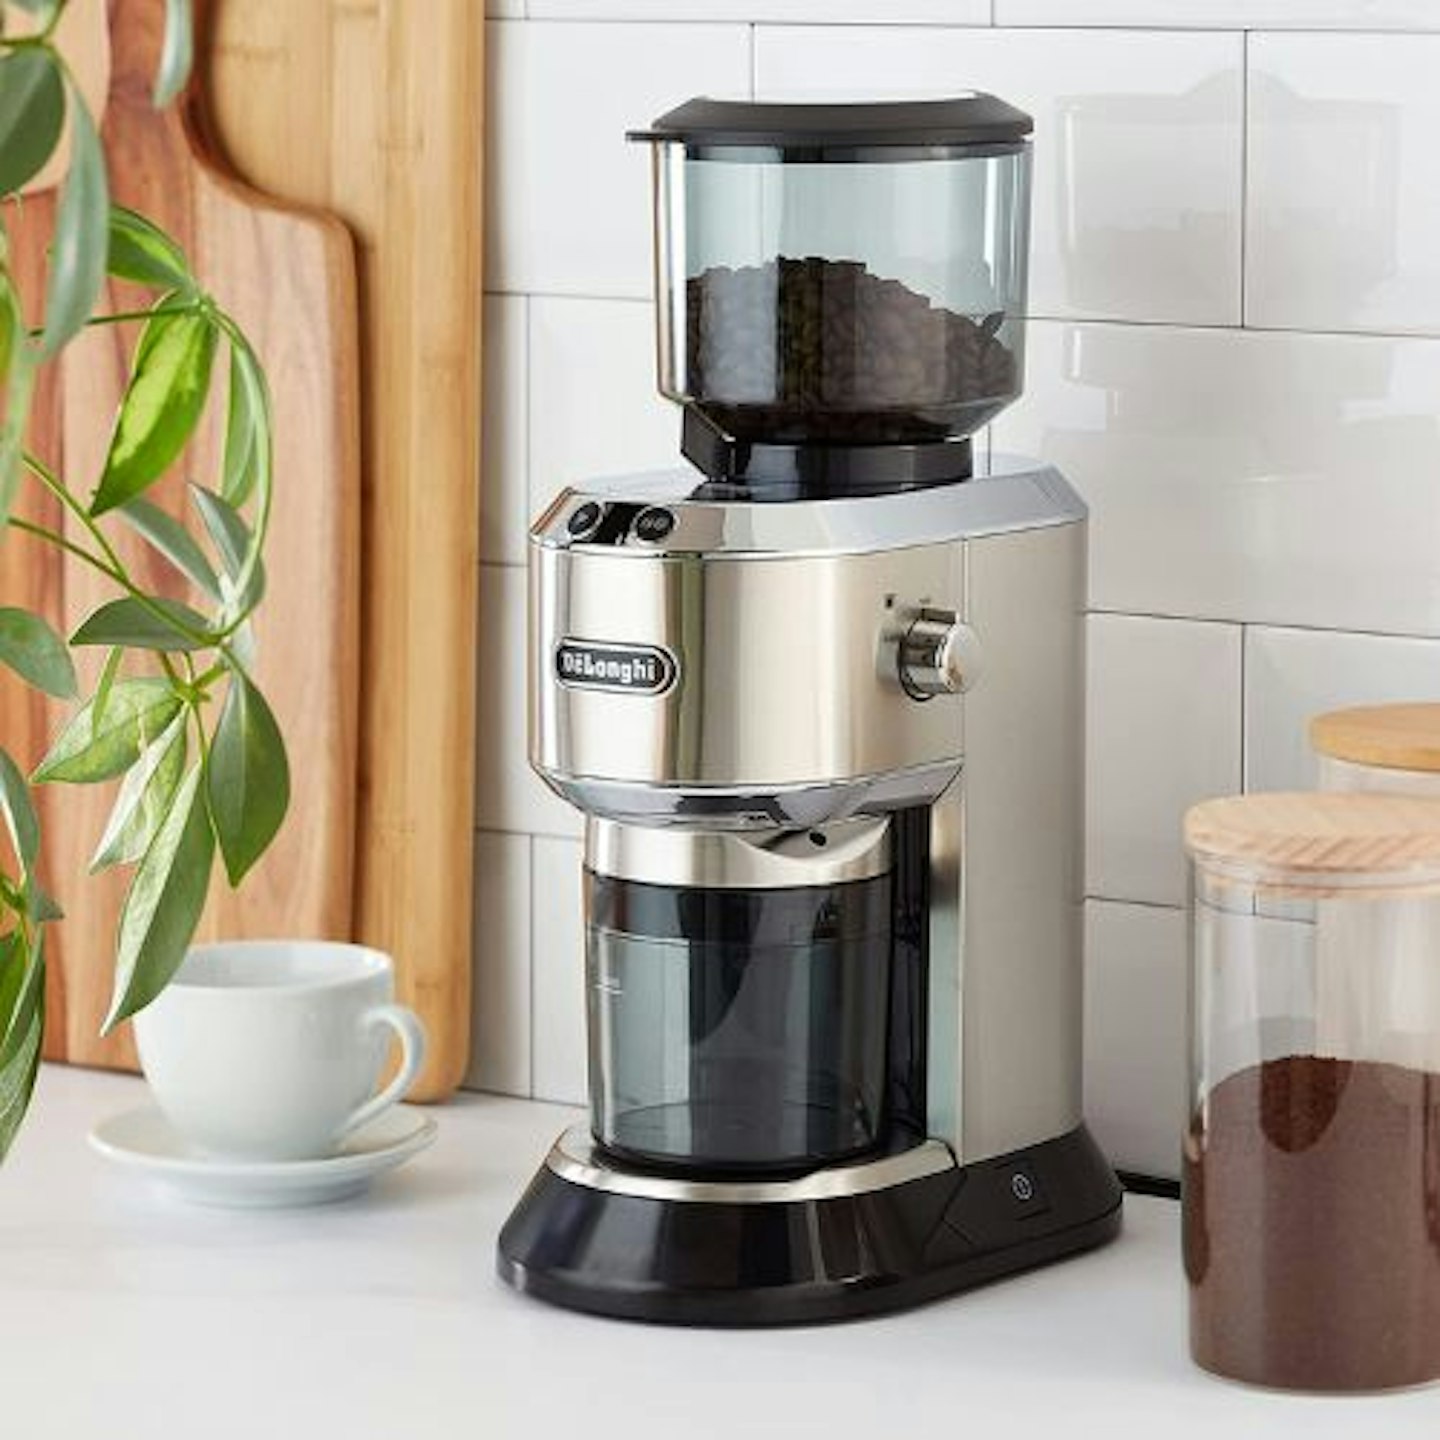 https://images.bauerhosting.com/affiliates/sites/10/2023/01/DeLonghi-Dedica-Style-KG521.M-Coffee-Grinder.jpg?auto=format&w=1440&q=80